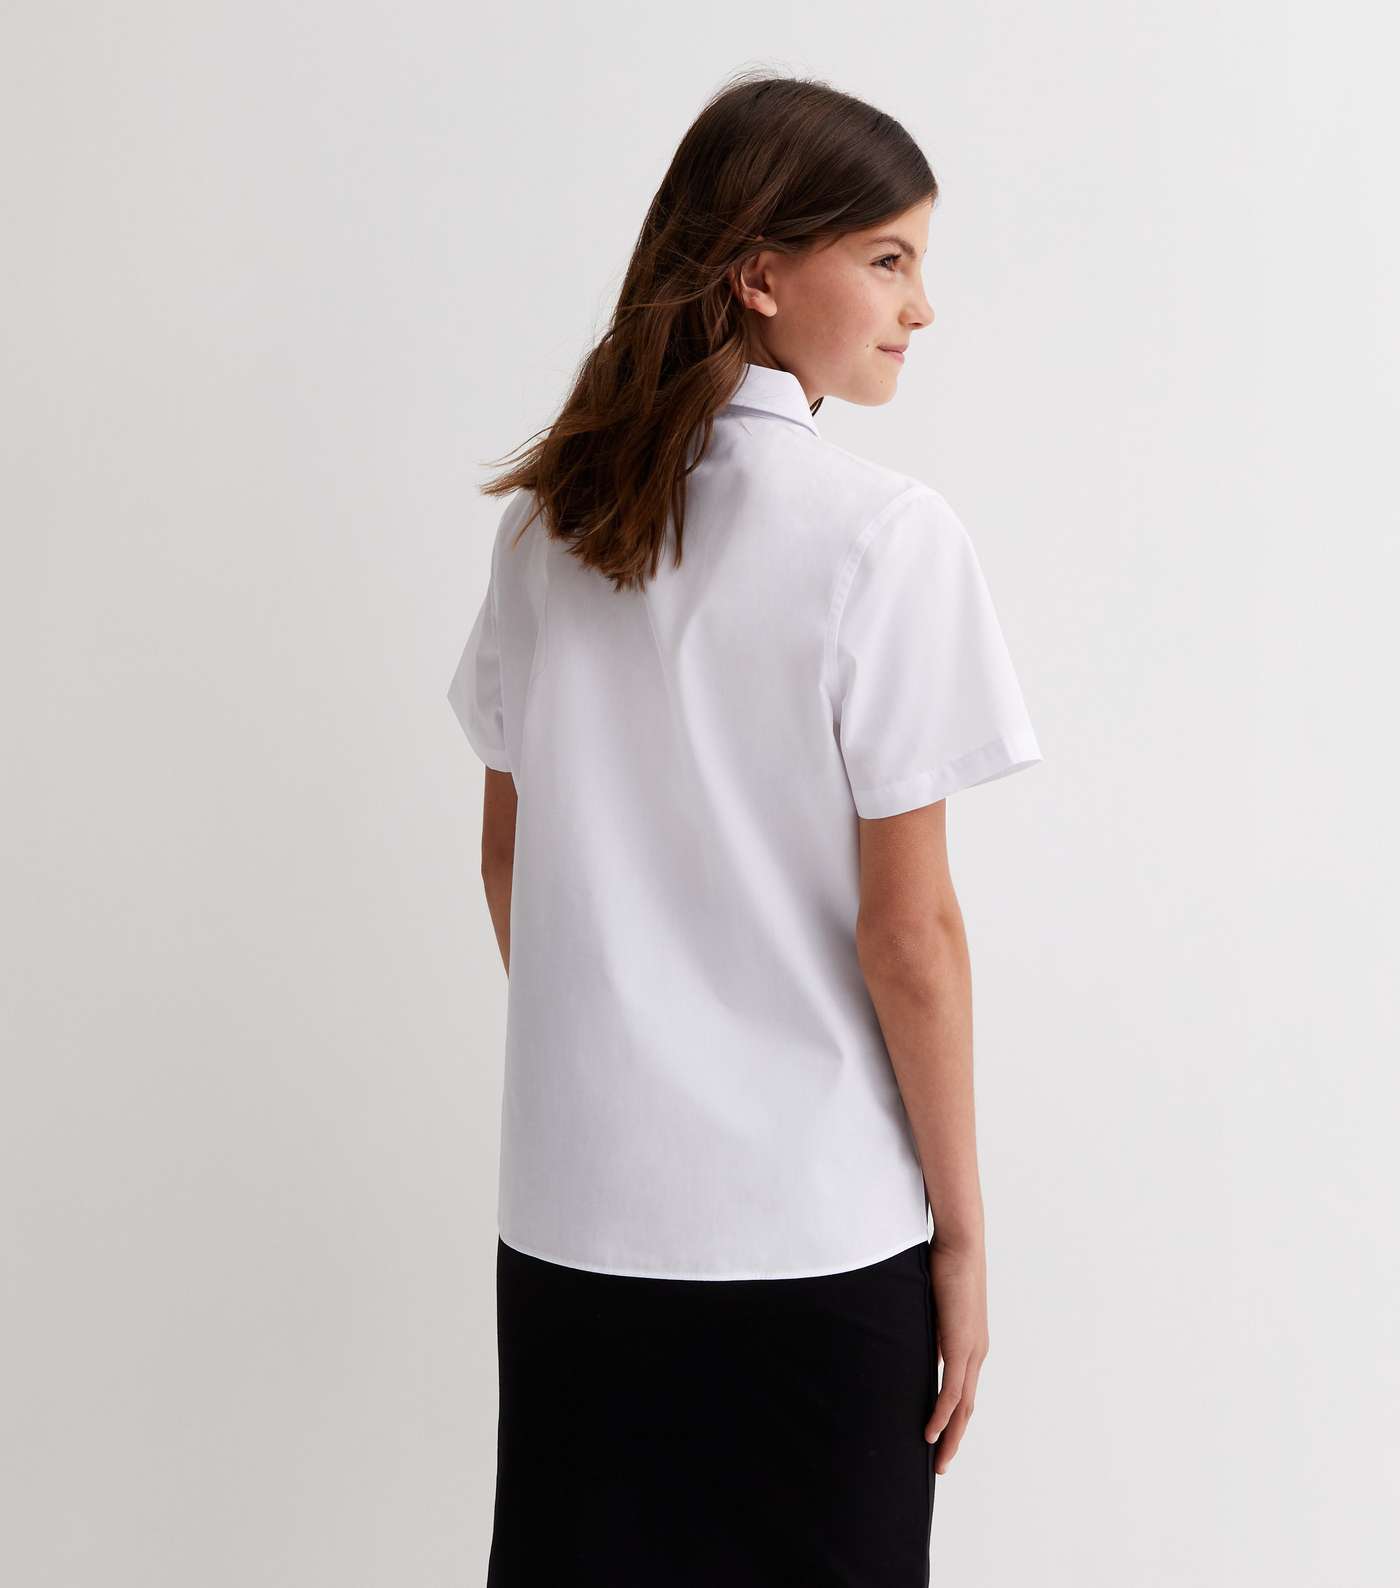 Girls 5 Pack White Short Sleeve Regular Fit School Shirts Image 4